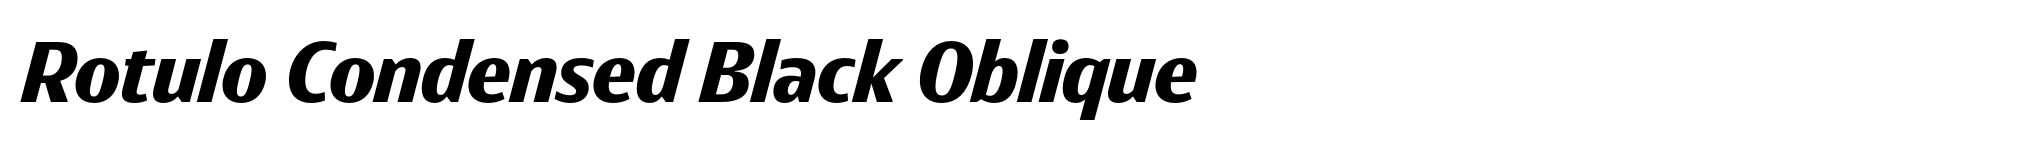 Rotulo Condensed Black Oblique image